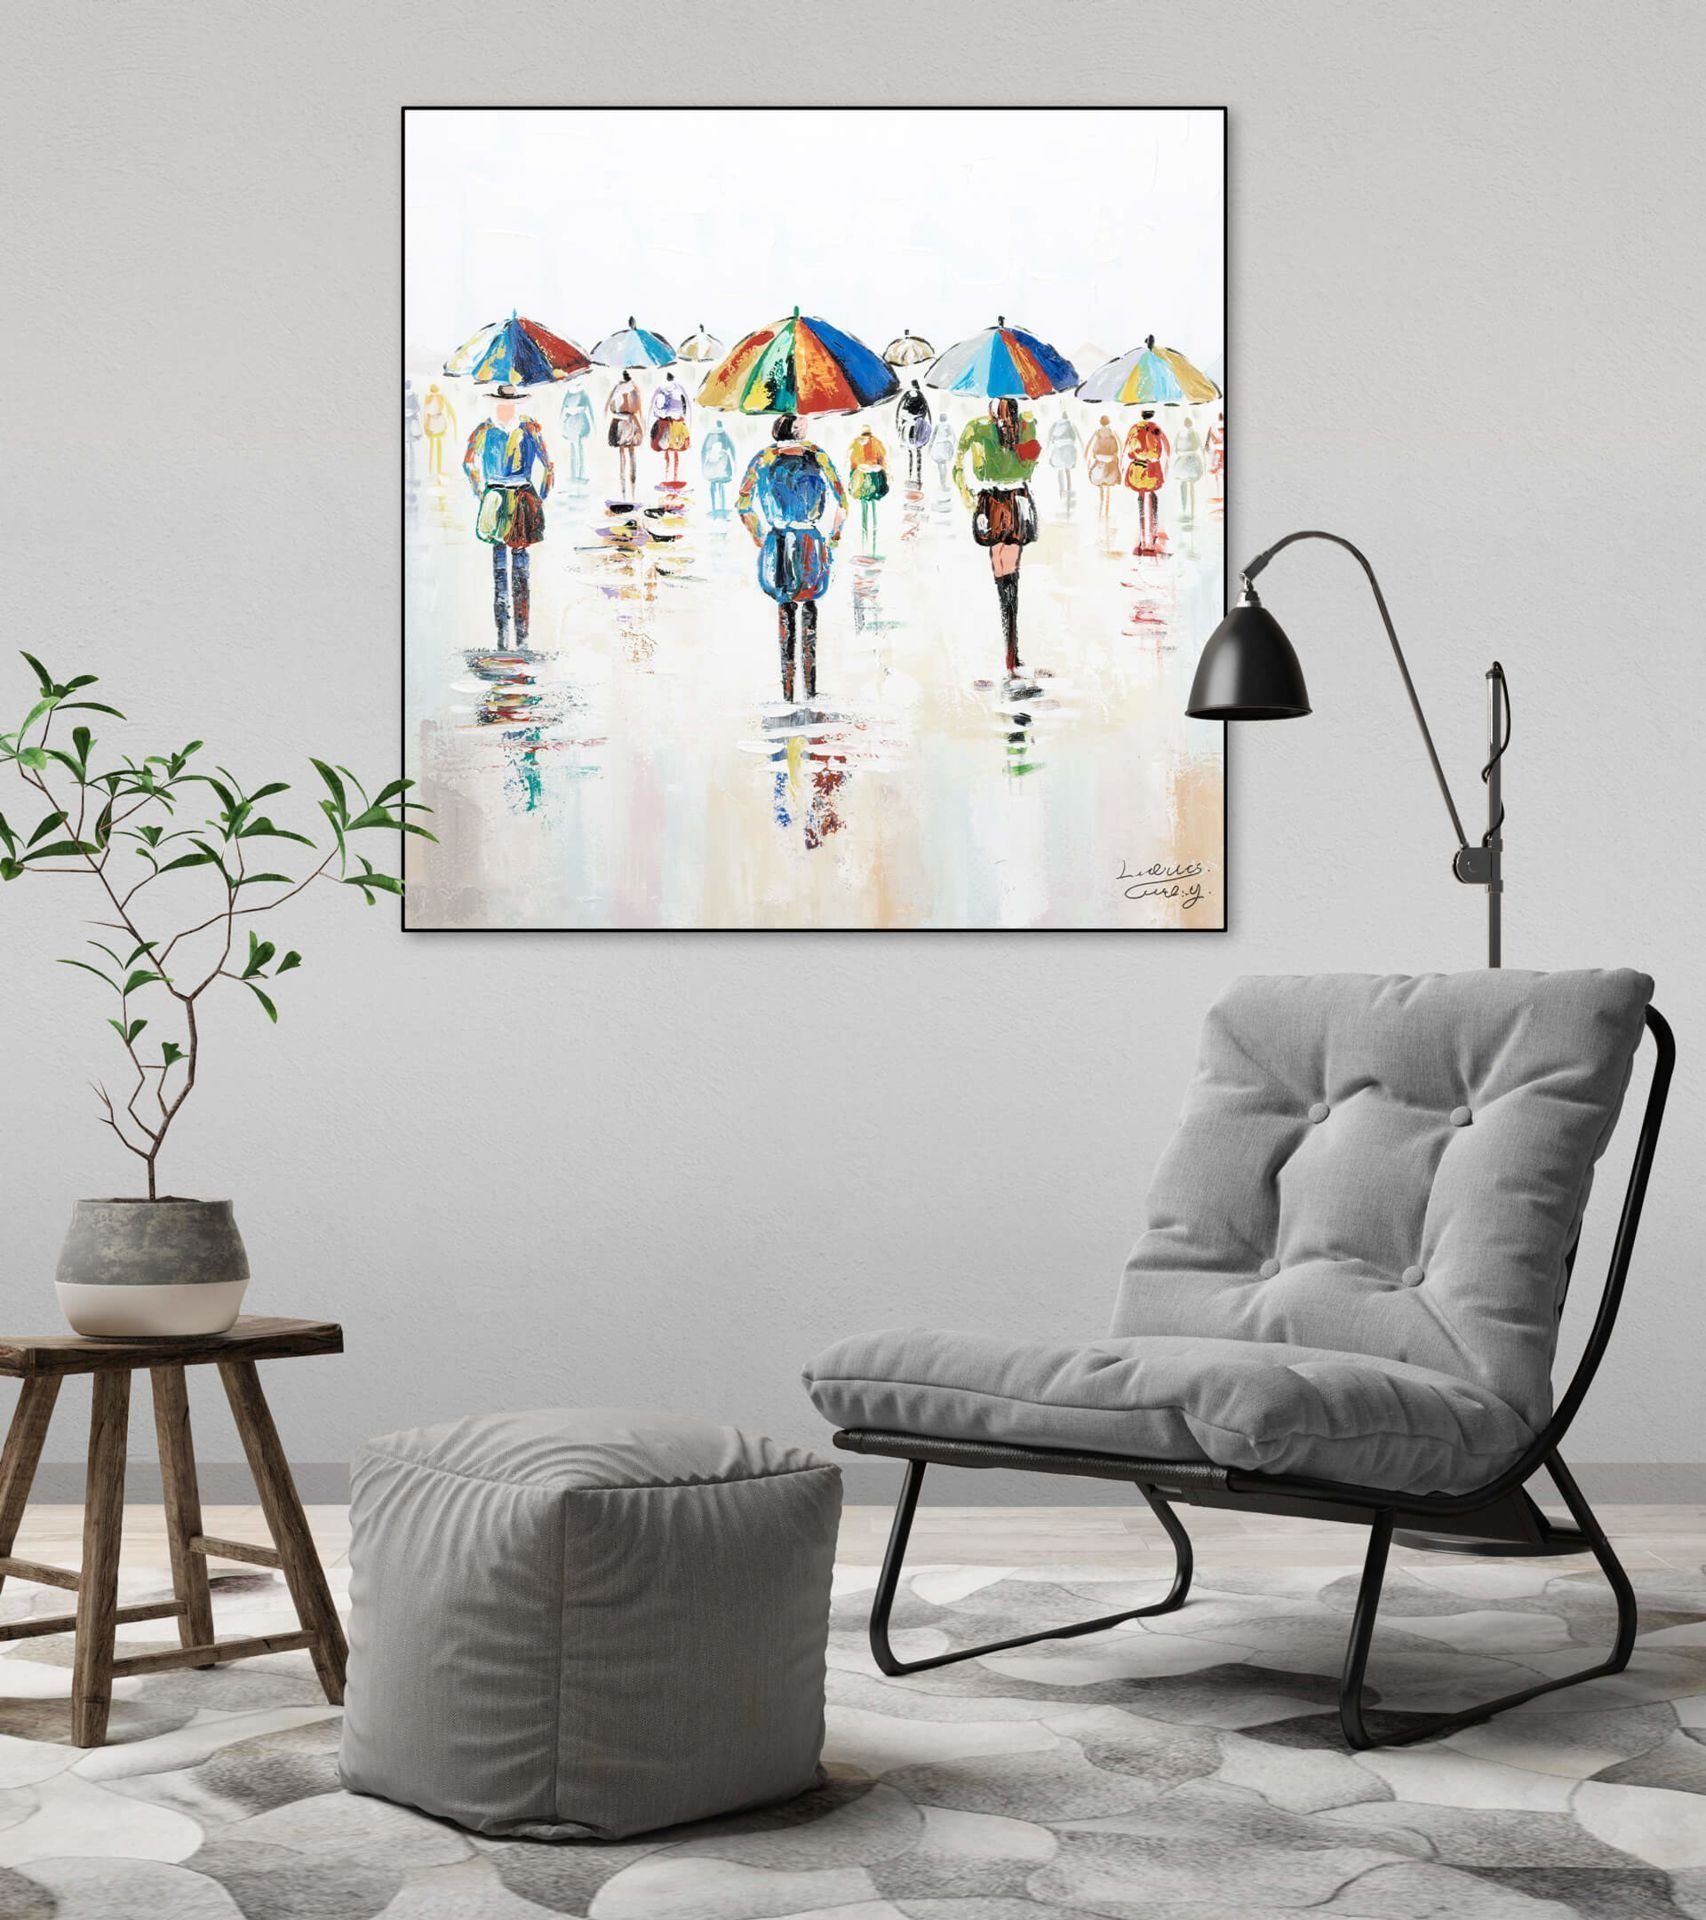 Wandbild Leinwandbild HANDGEMALT Süße 100% Wohnzimmer KUNSTLOFT 80x80 Gemälde Regengüsse cm,